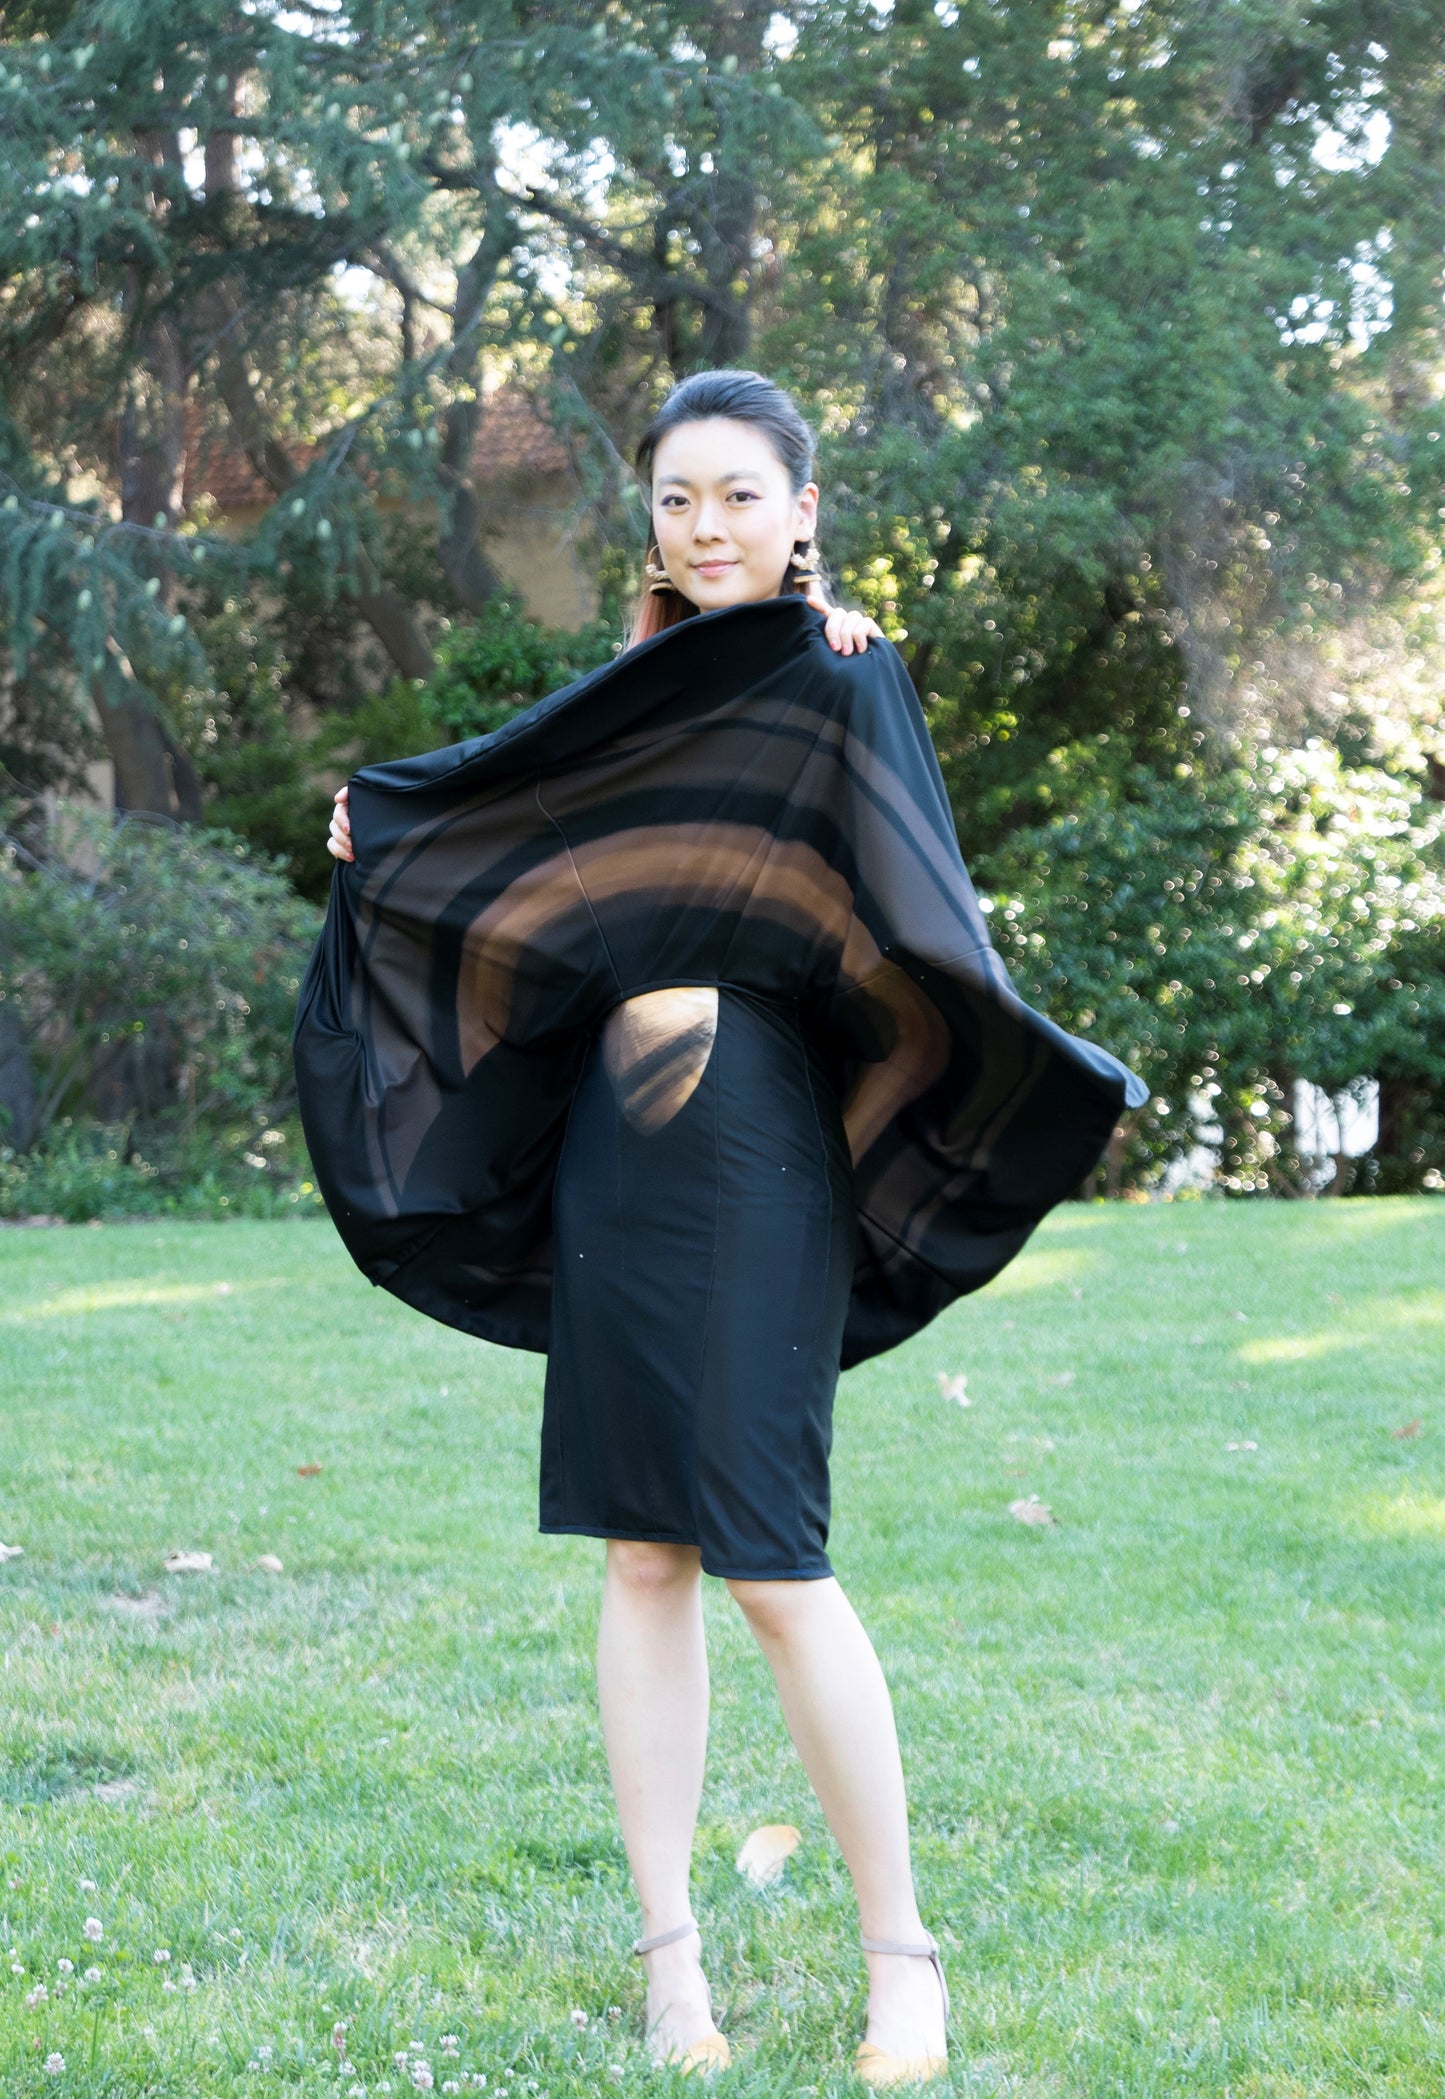 Saturn dress DIY fabric patterns